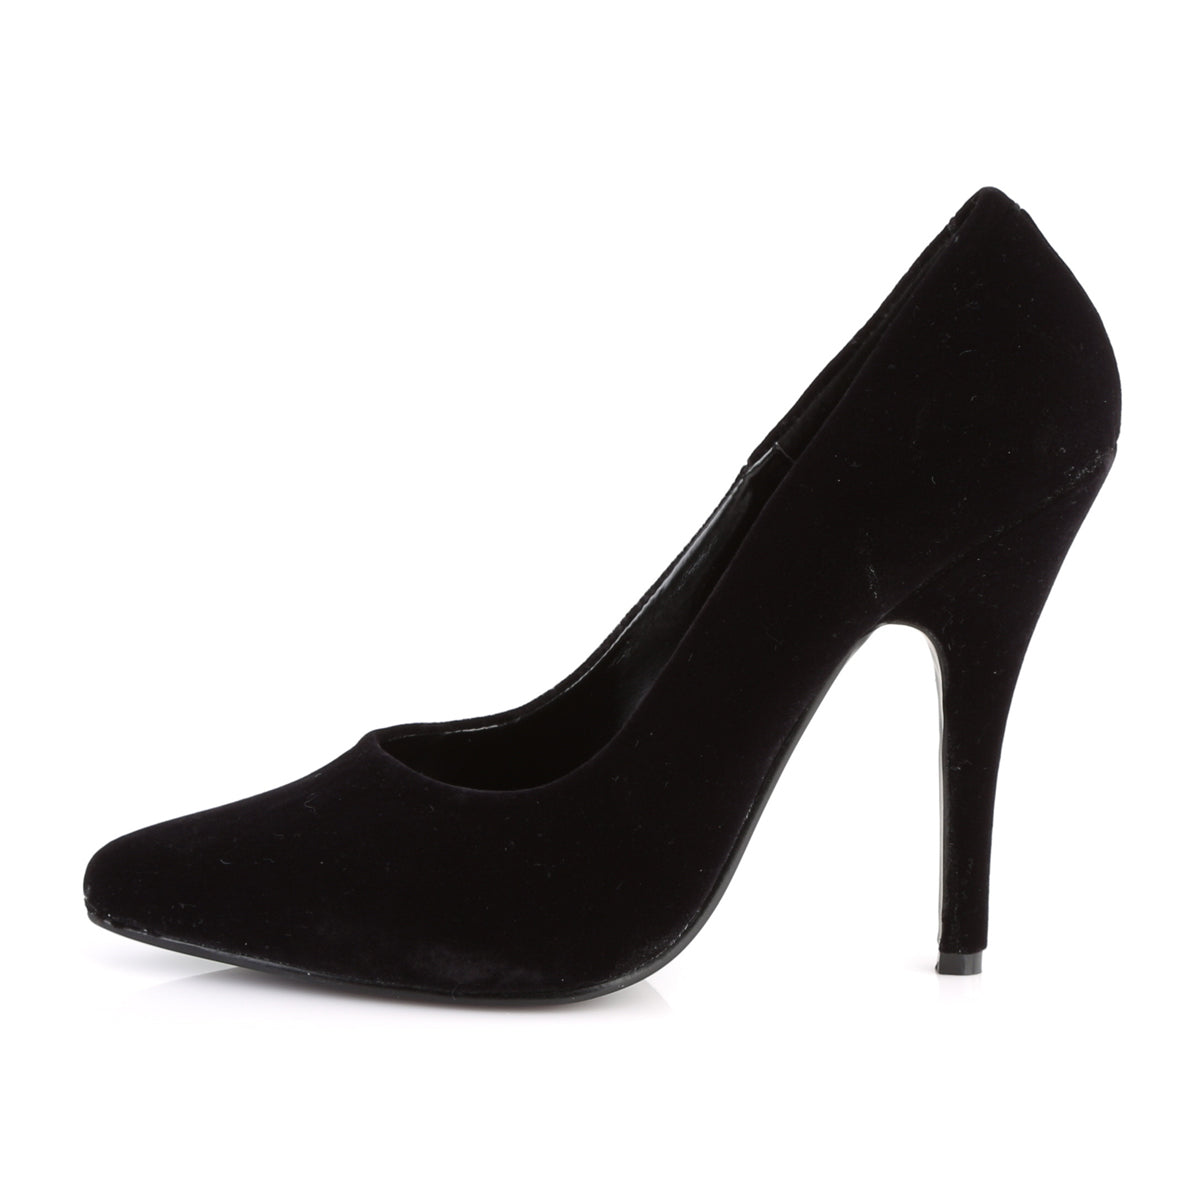 SEDUCE-420 Sexy Shoes 5" Heel Black Velvet Fetish Footwear-Pleaser- Sexy Shoes Pole Dance Heels